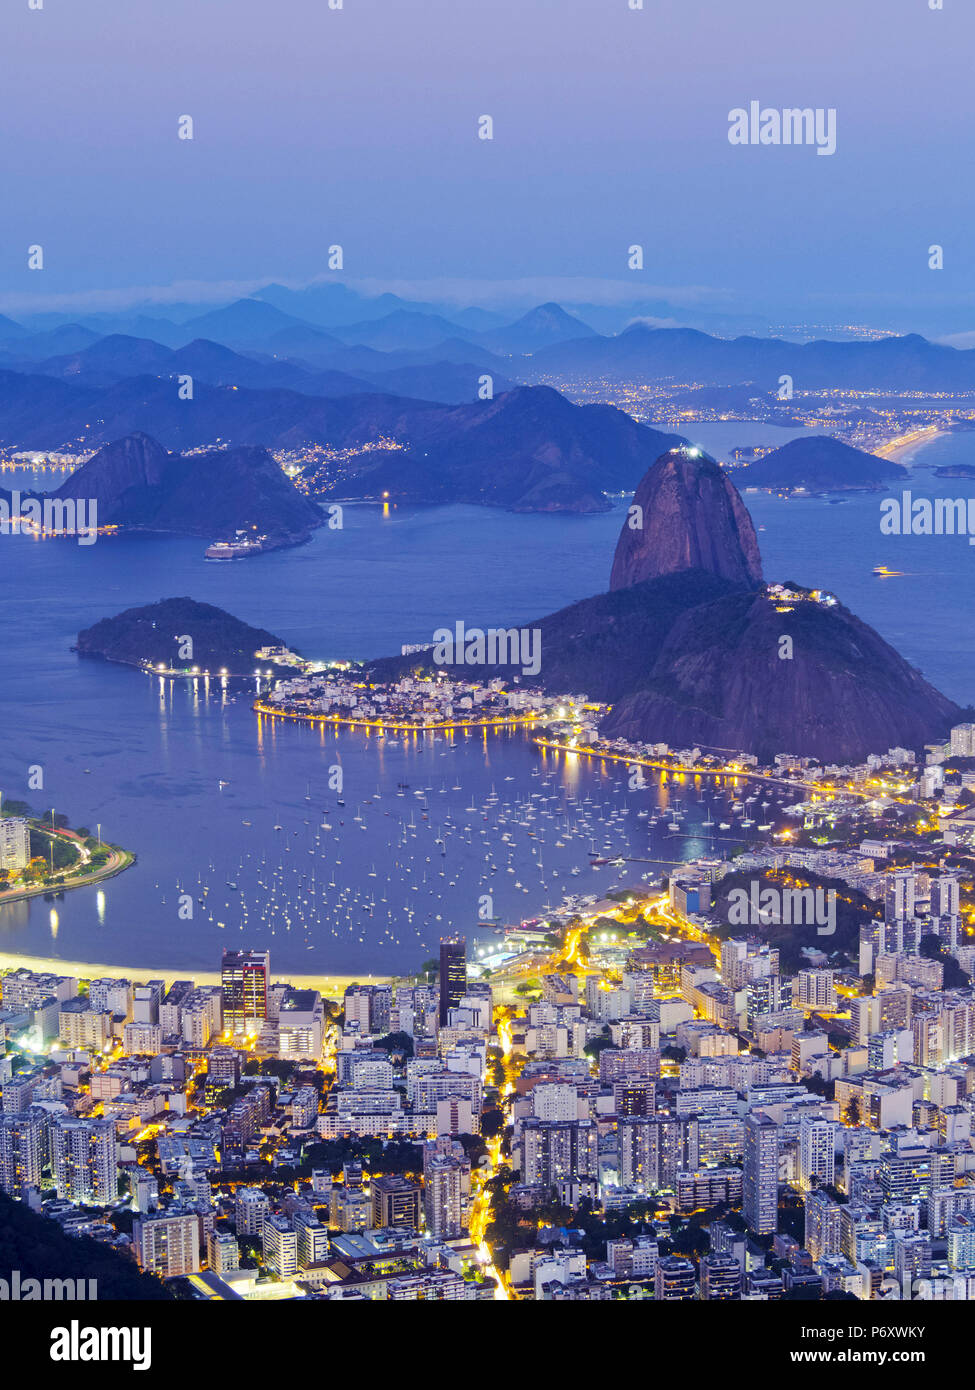 Brazil, State of Rio de Janeiro, City of Rio de Janeiro, Corcovado Mountain, Twilight view of the city with Sugarloaf Mountain and Guanabara Bay. Stock Photo